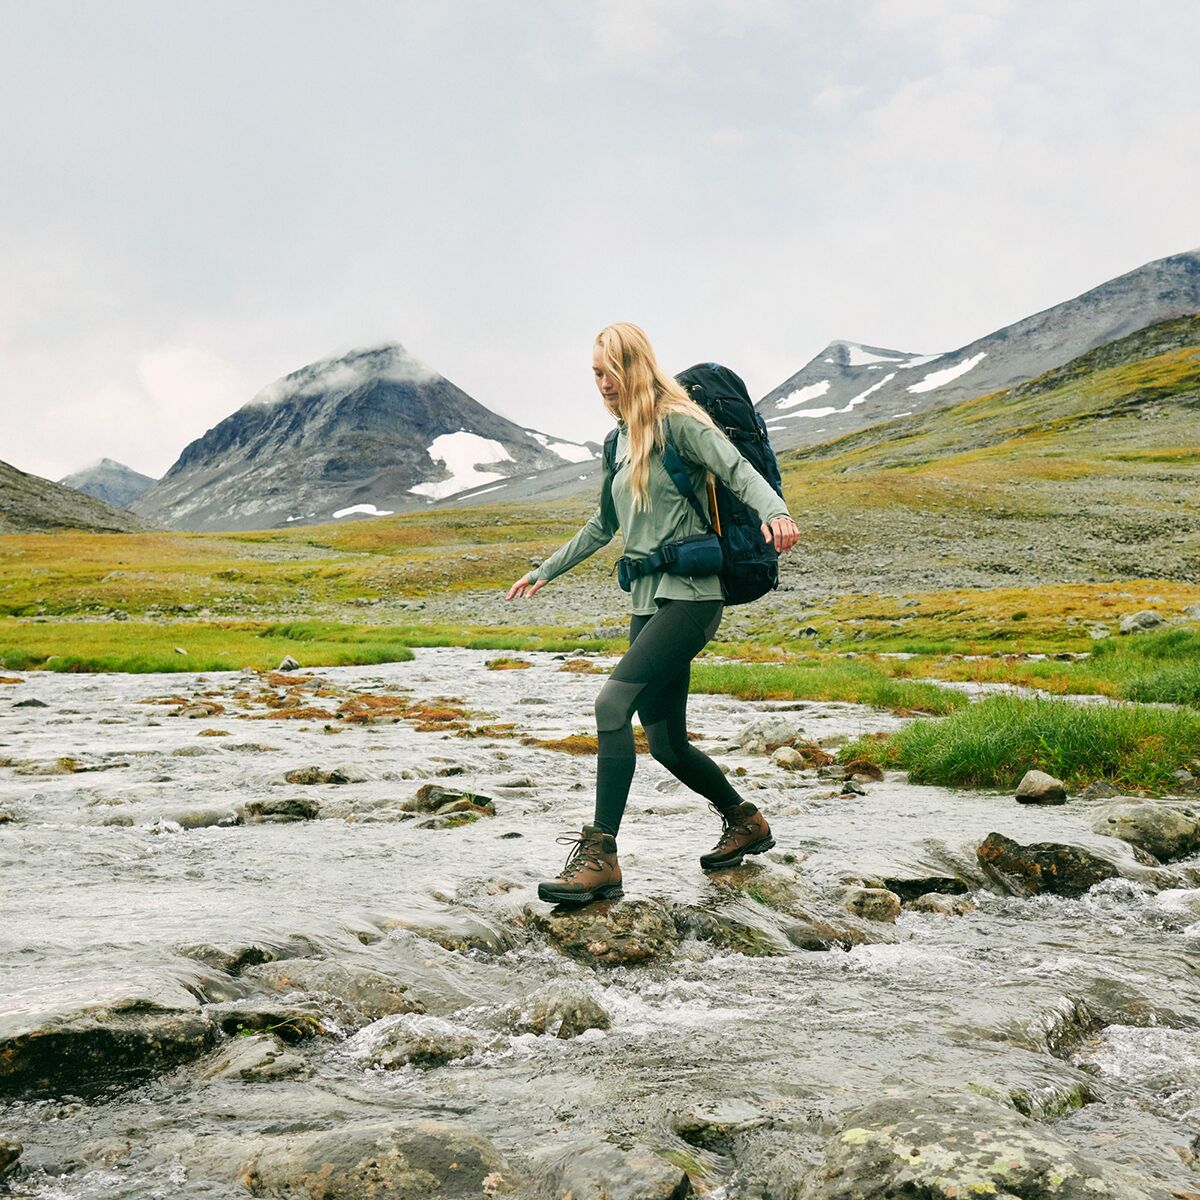 Fjallraven Abisko Trekking Tights Pro - Women's Medium - Covered